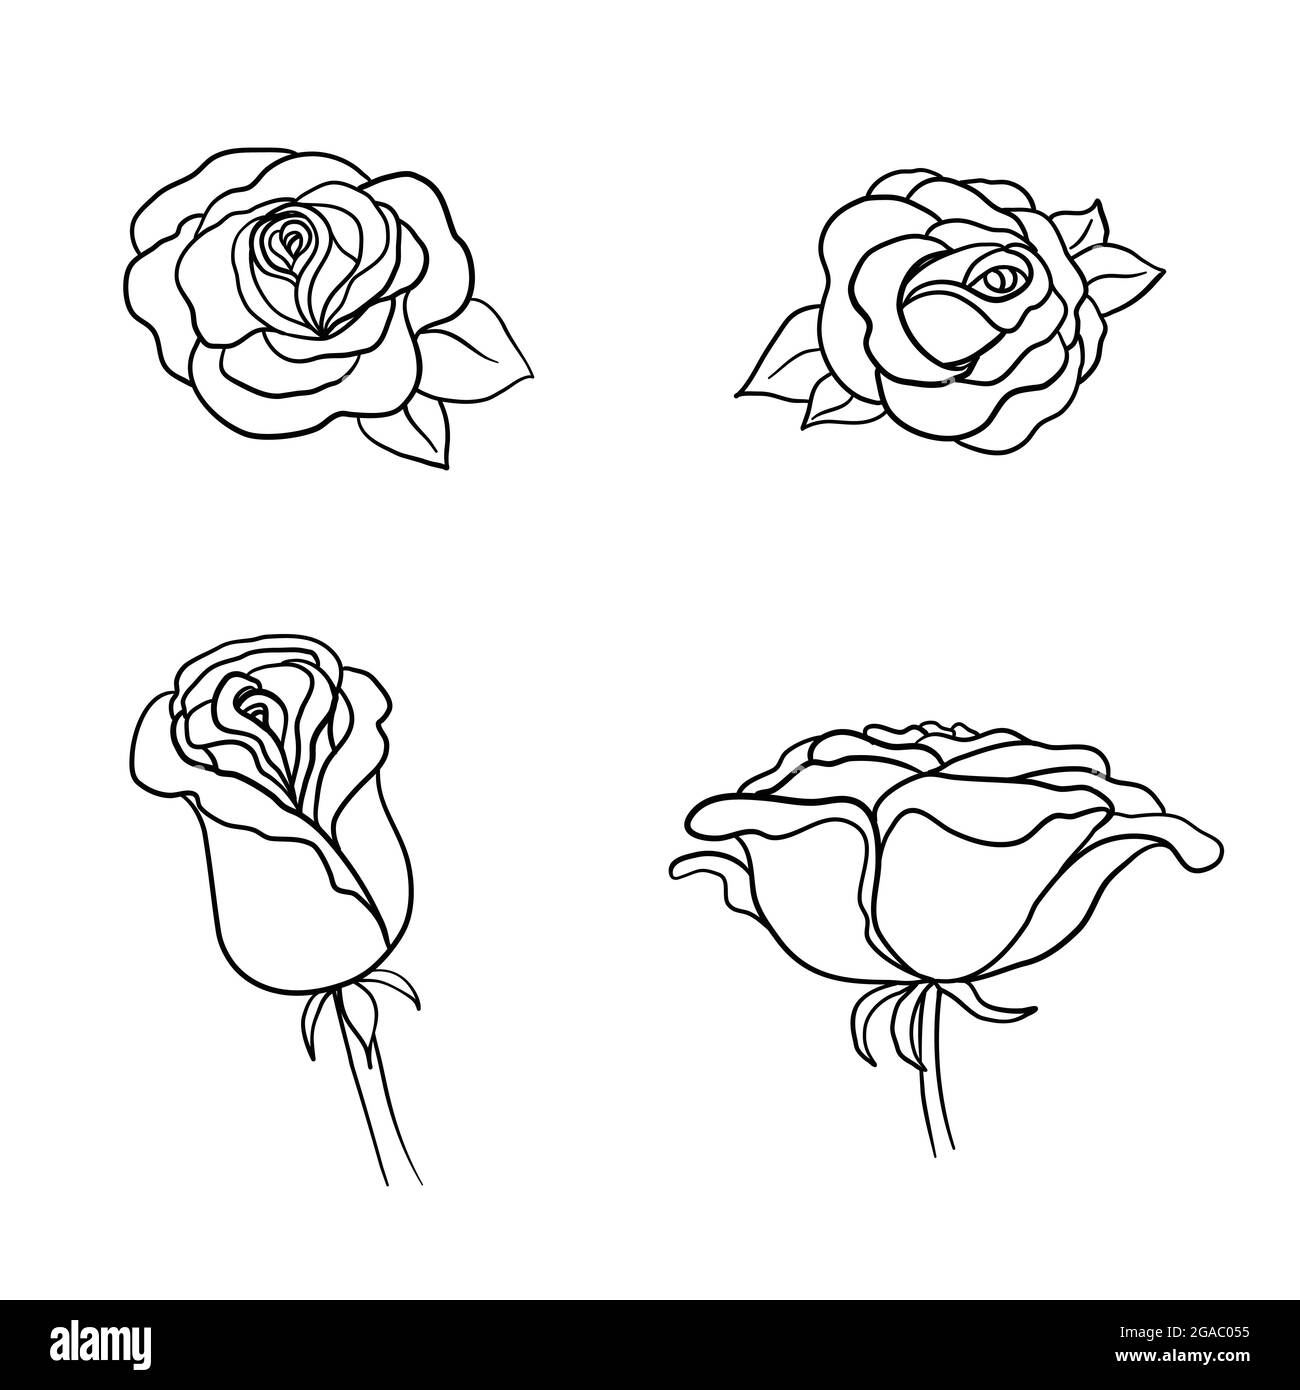 30 Beautiful Flower Drawings | Art and Design